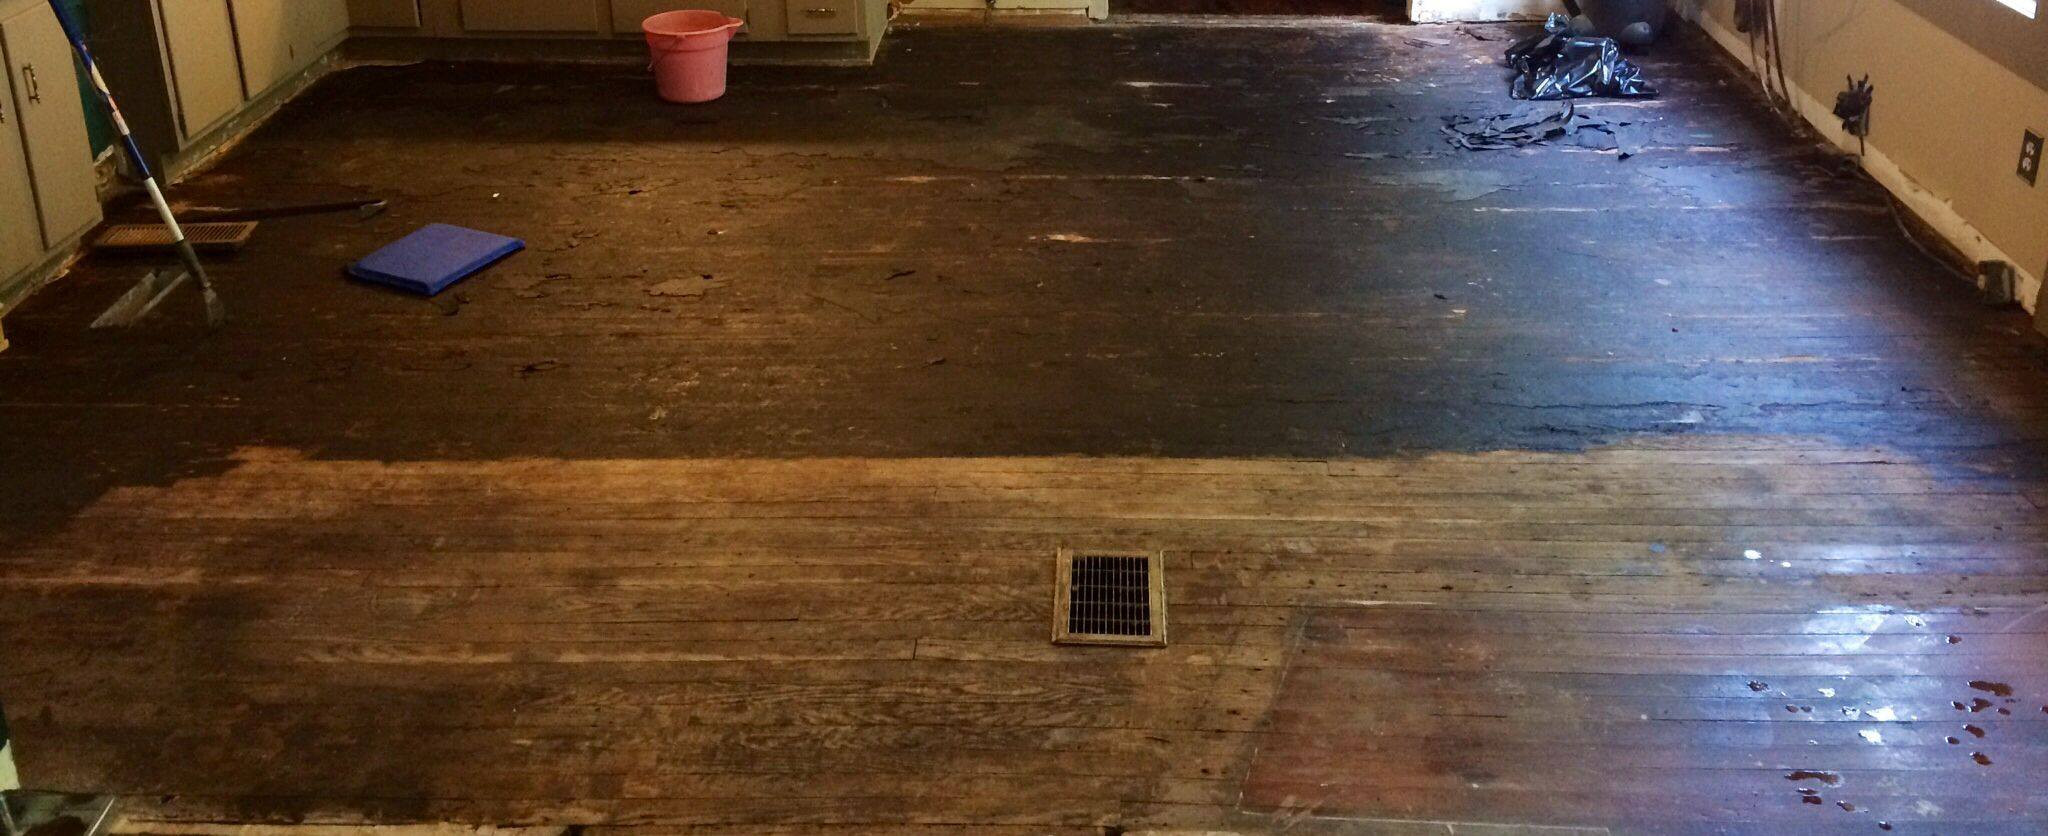 hardwood floor care vinegar of 15 removing glue from laminate flooring trends best flooring ideas for kitchen floor tiles home depot elegant s media cache ak0 pinimg 736x 43 0d 97 best